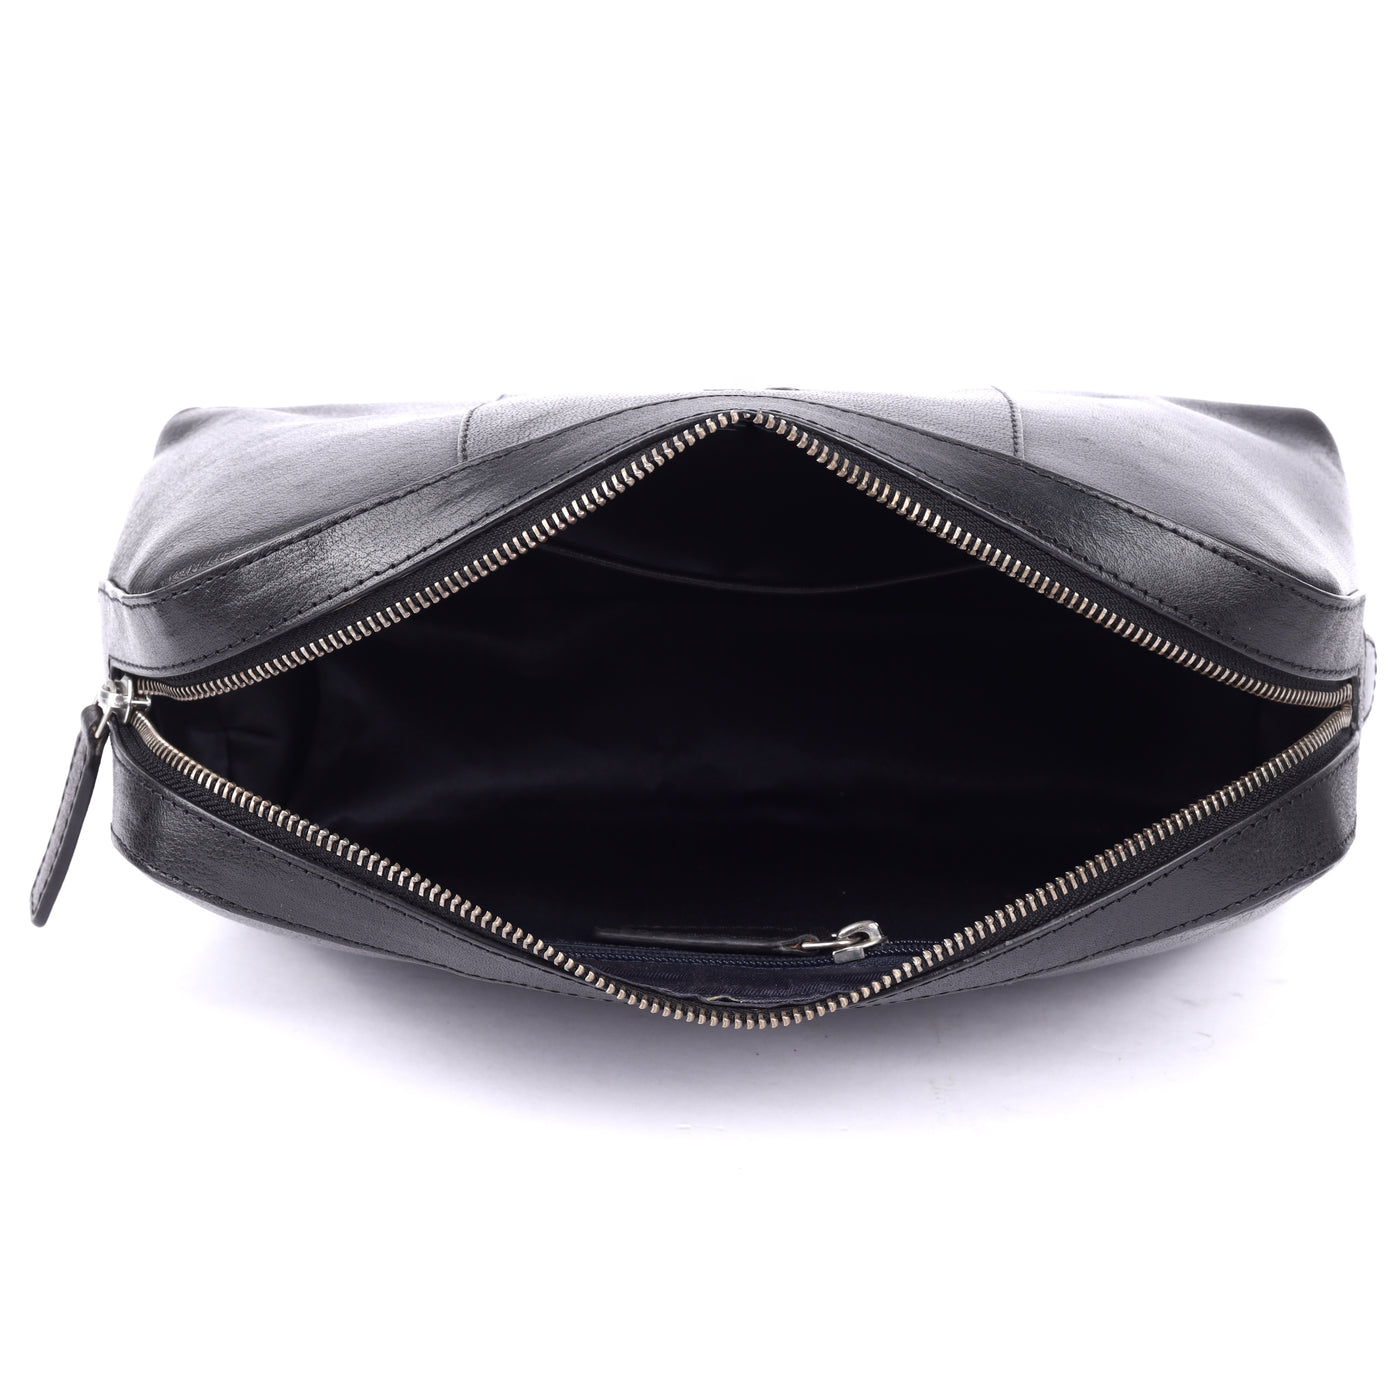 New Design Black Leather Wash Bag: Modern Luxury for Travel